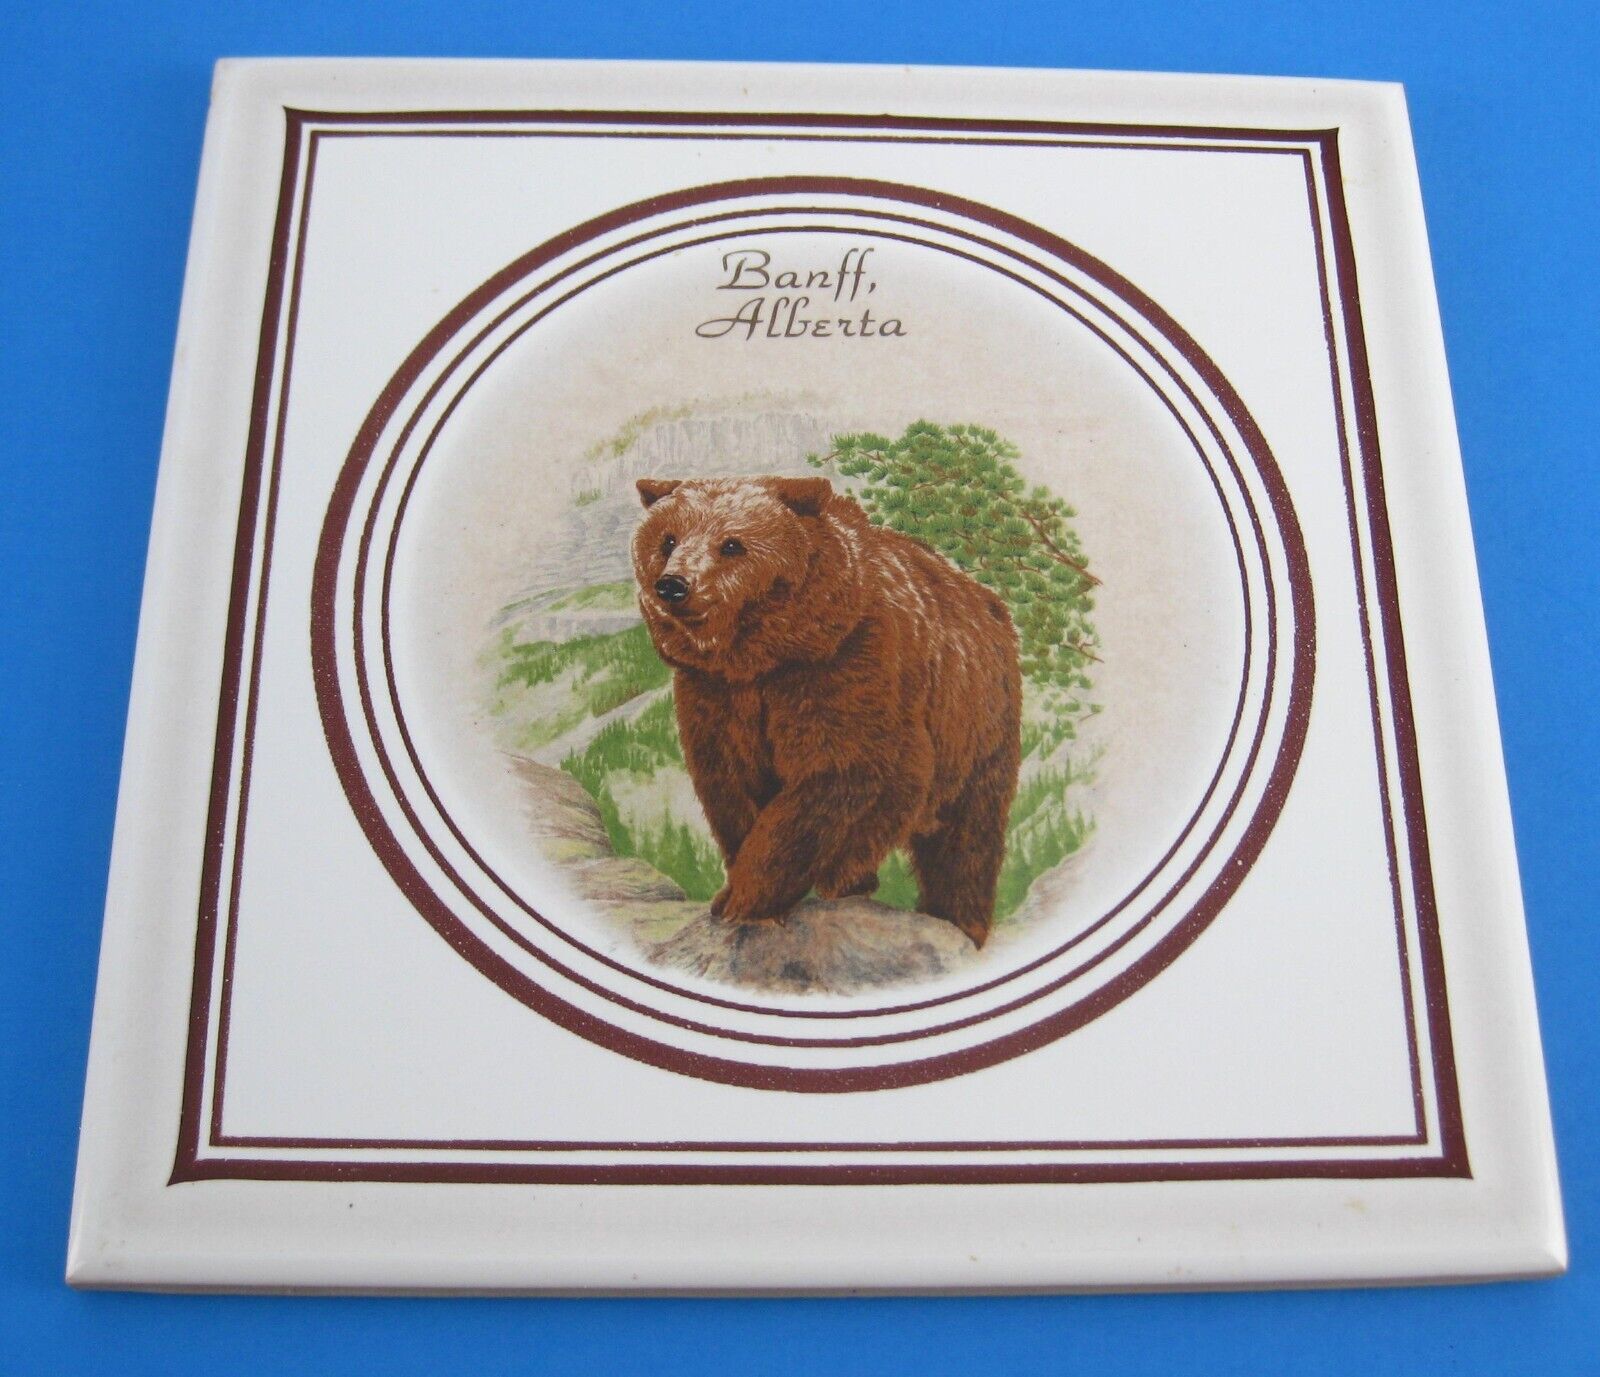 Banff Alberta Tile Trivet Brown Bear Souvenir Hand Decorated in Canada Vintage